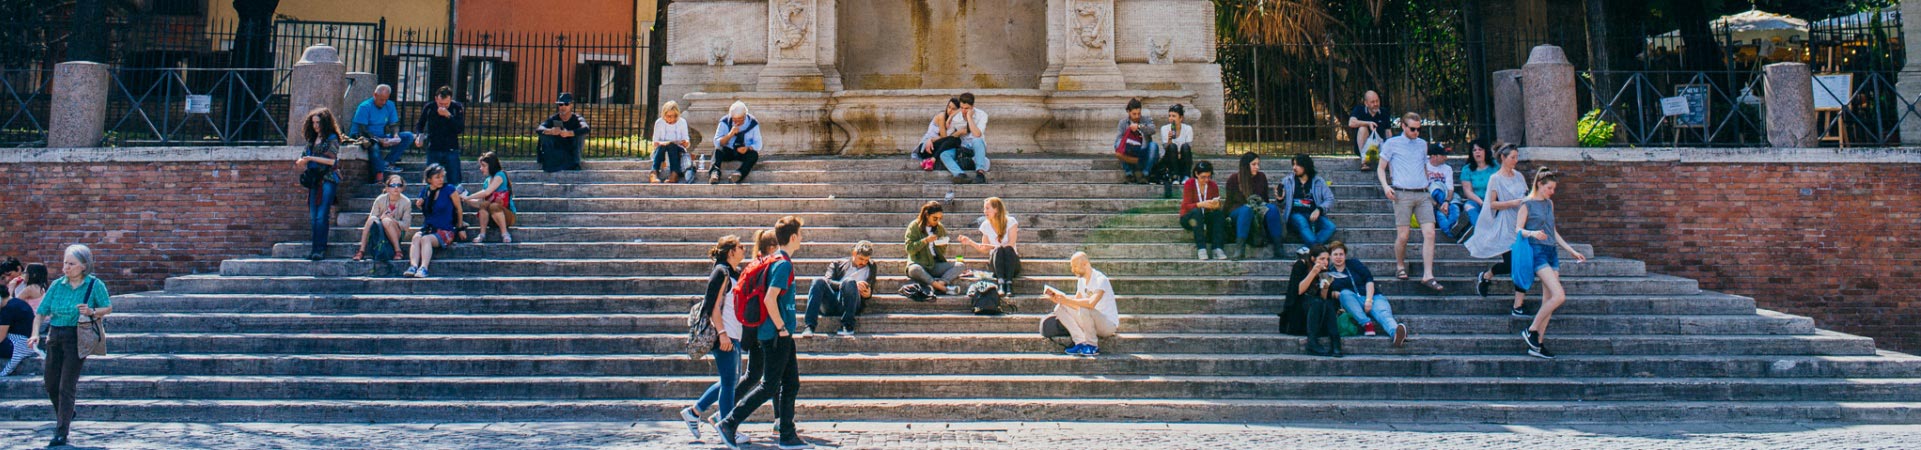 Programs for High Schools | John Cabot University | Rome, Italy